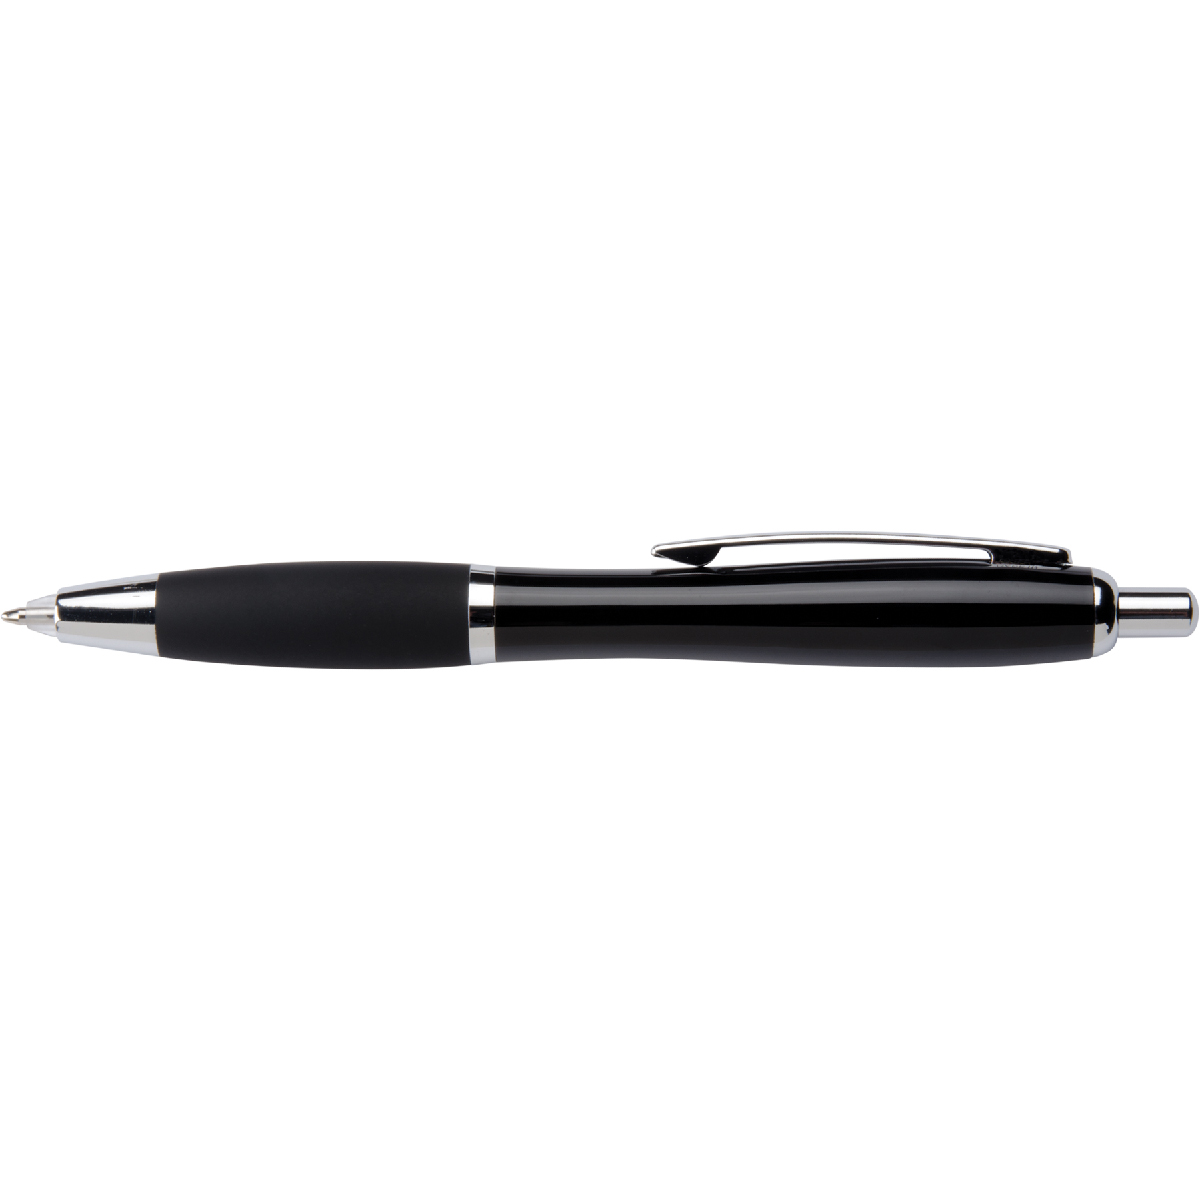 Black Santorini Torch Pen